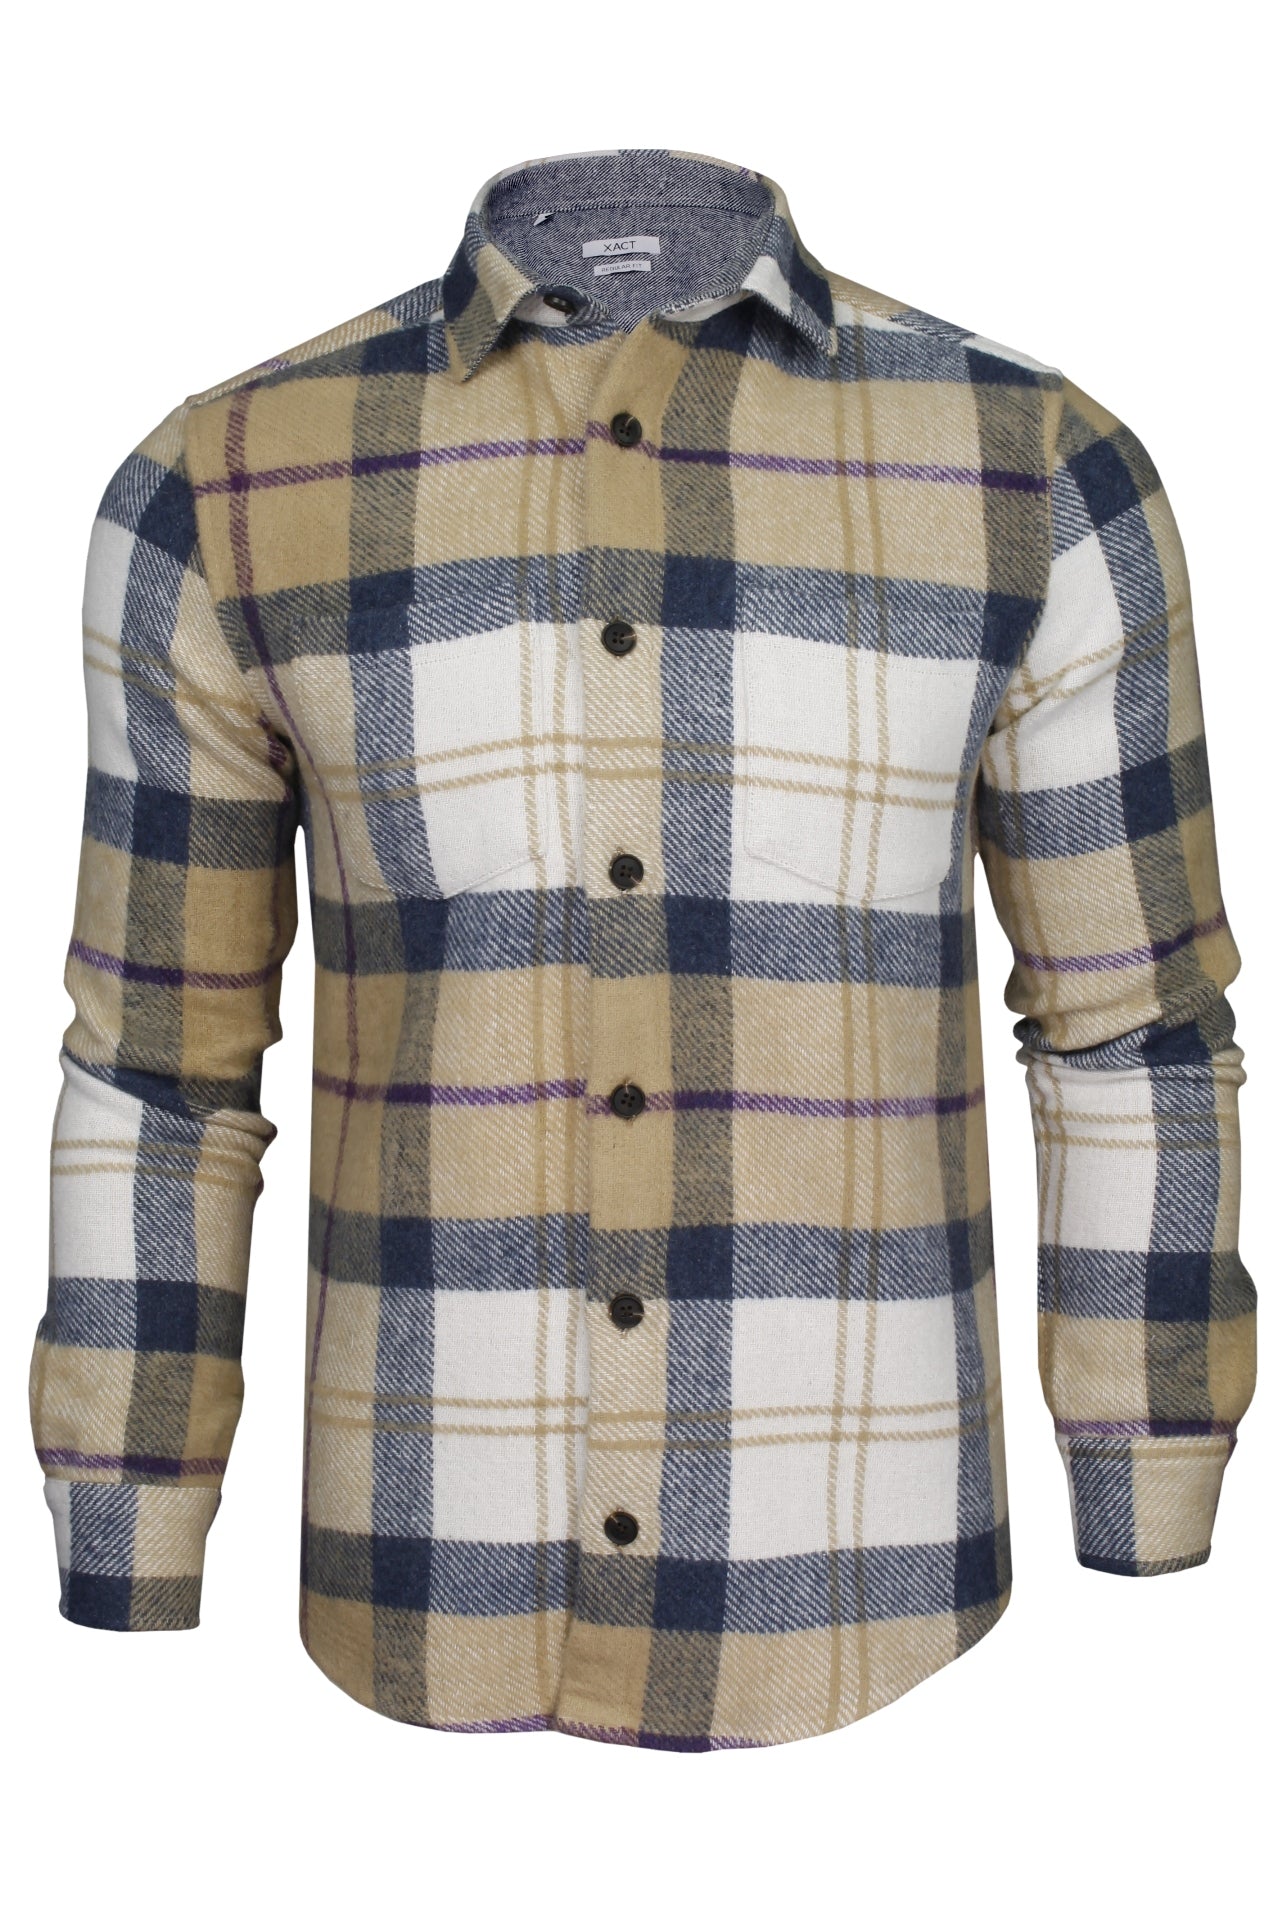 Xact Mens Heavy Flannel Plaid/ Check Lumberjack Over-Shirt - Long Sleeved-Main Image